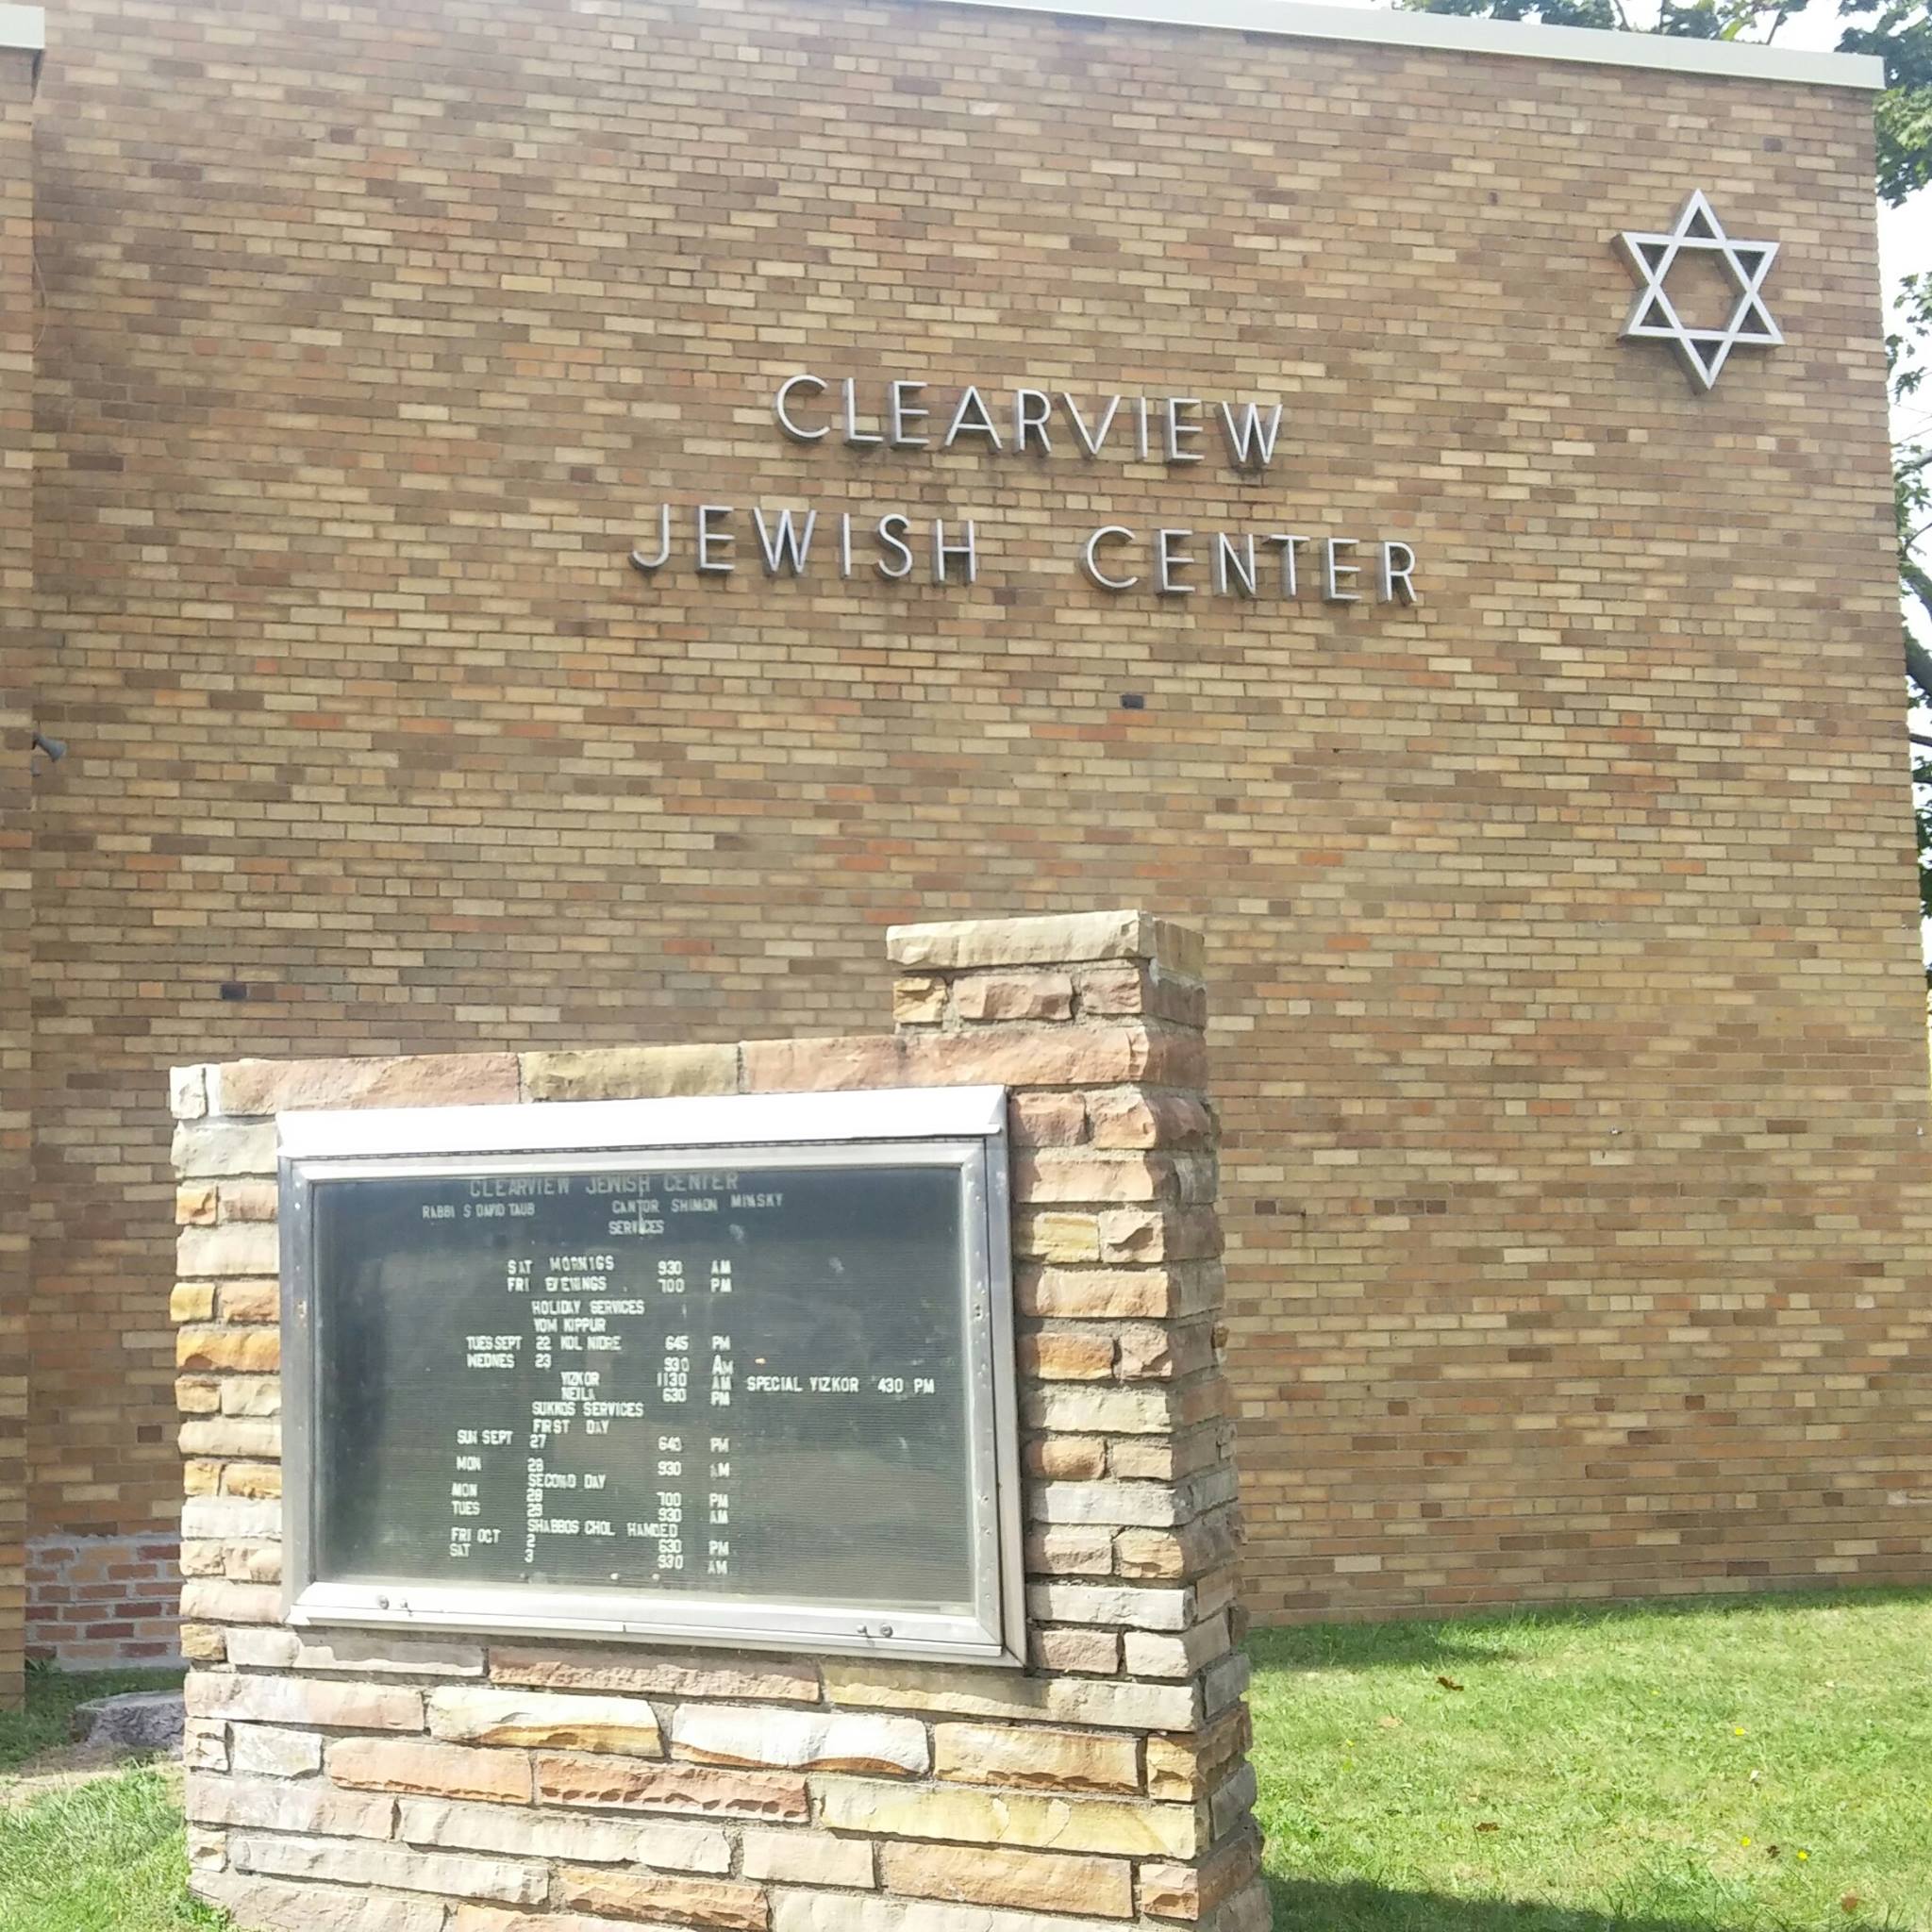 Clearview Jewish Center / Whitestone NY